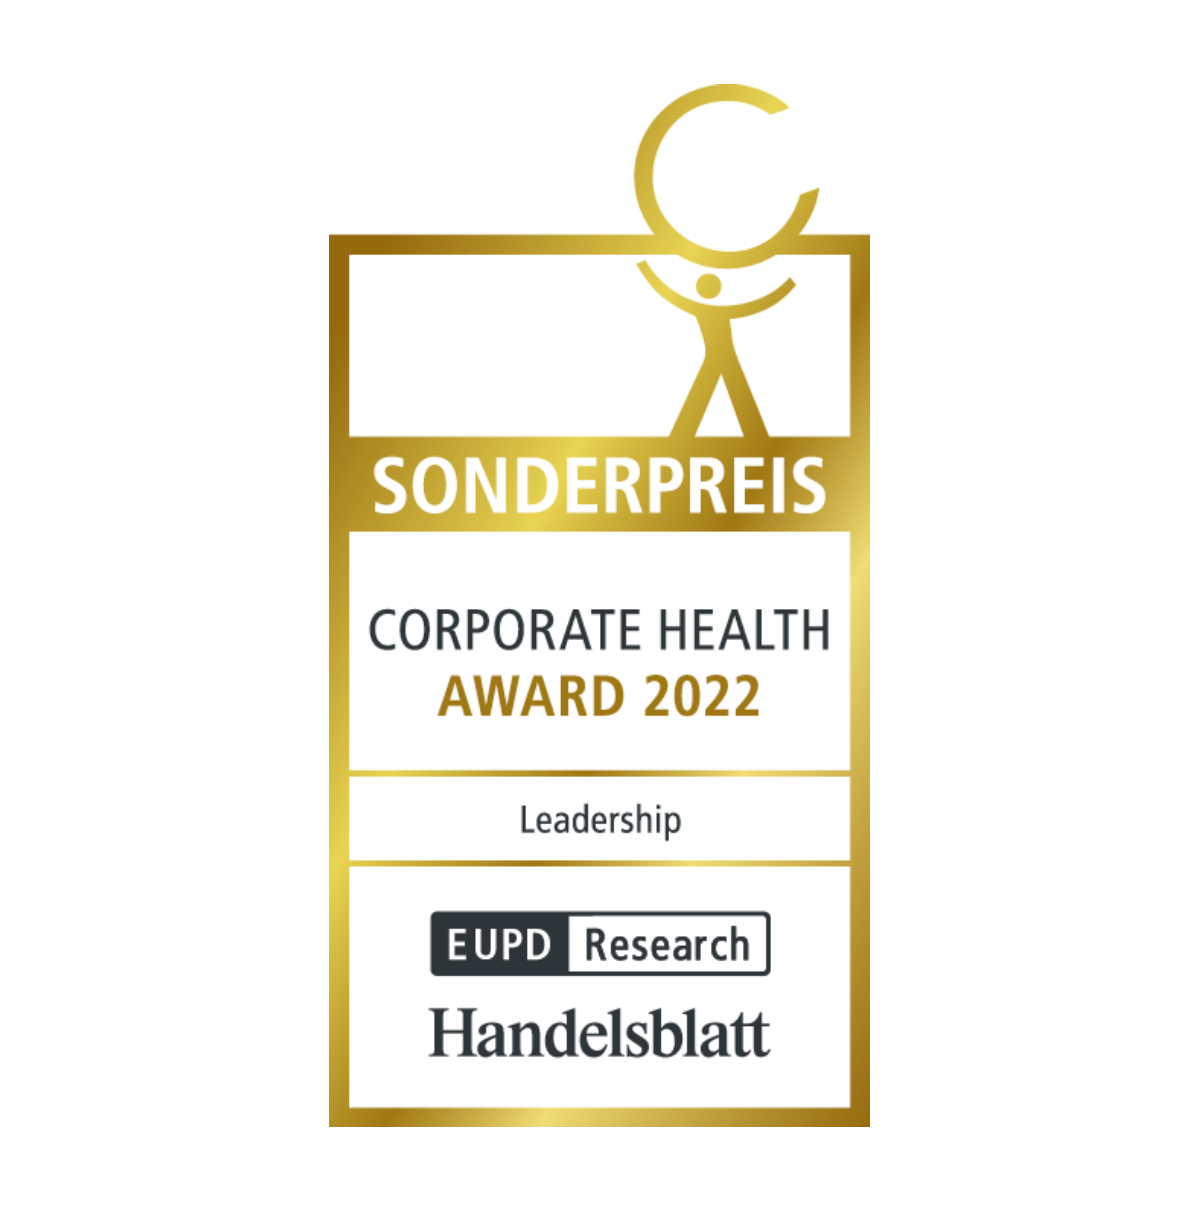 Corporate Health Award 2022: Sonderpreis Leadership